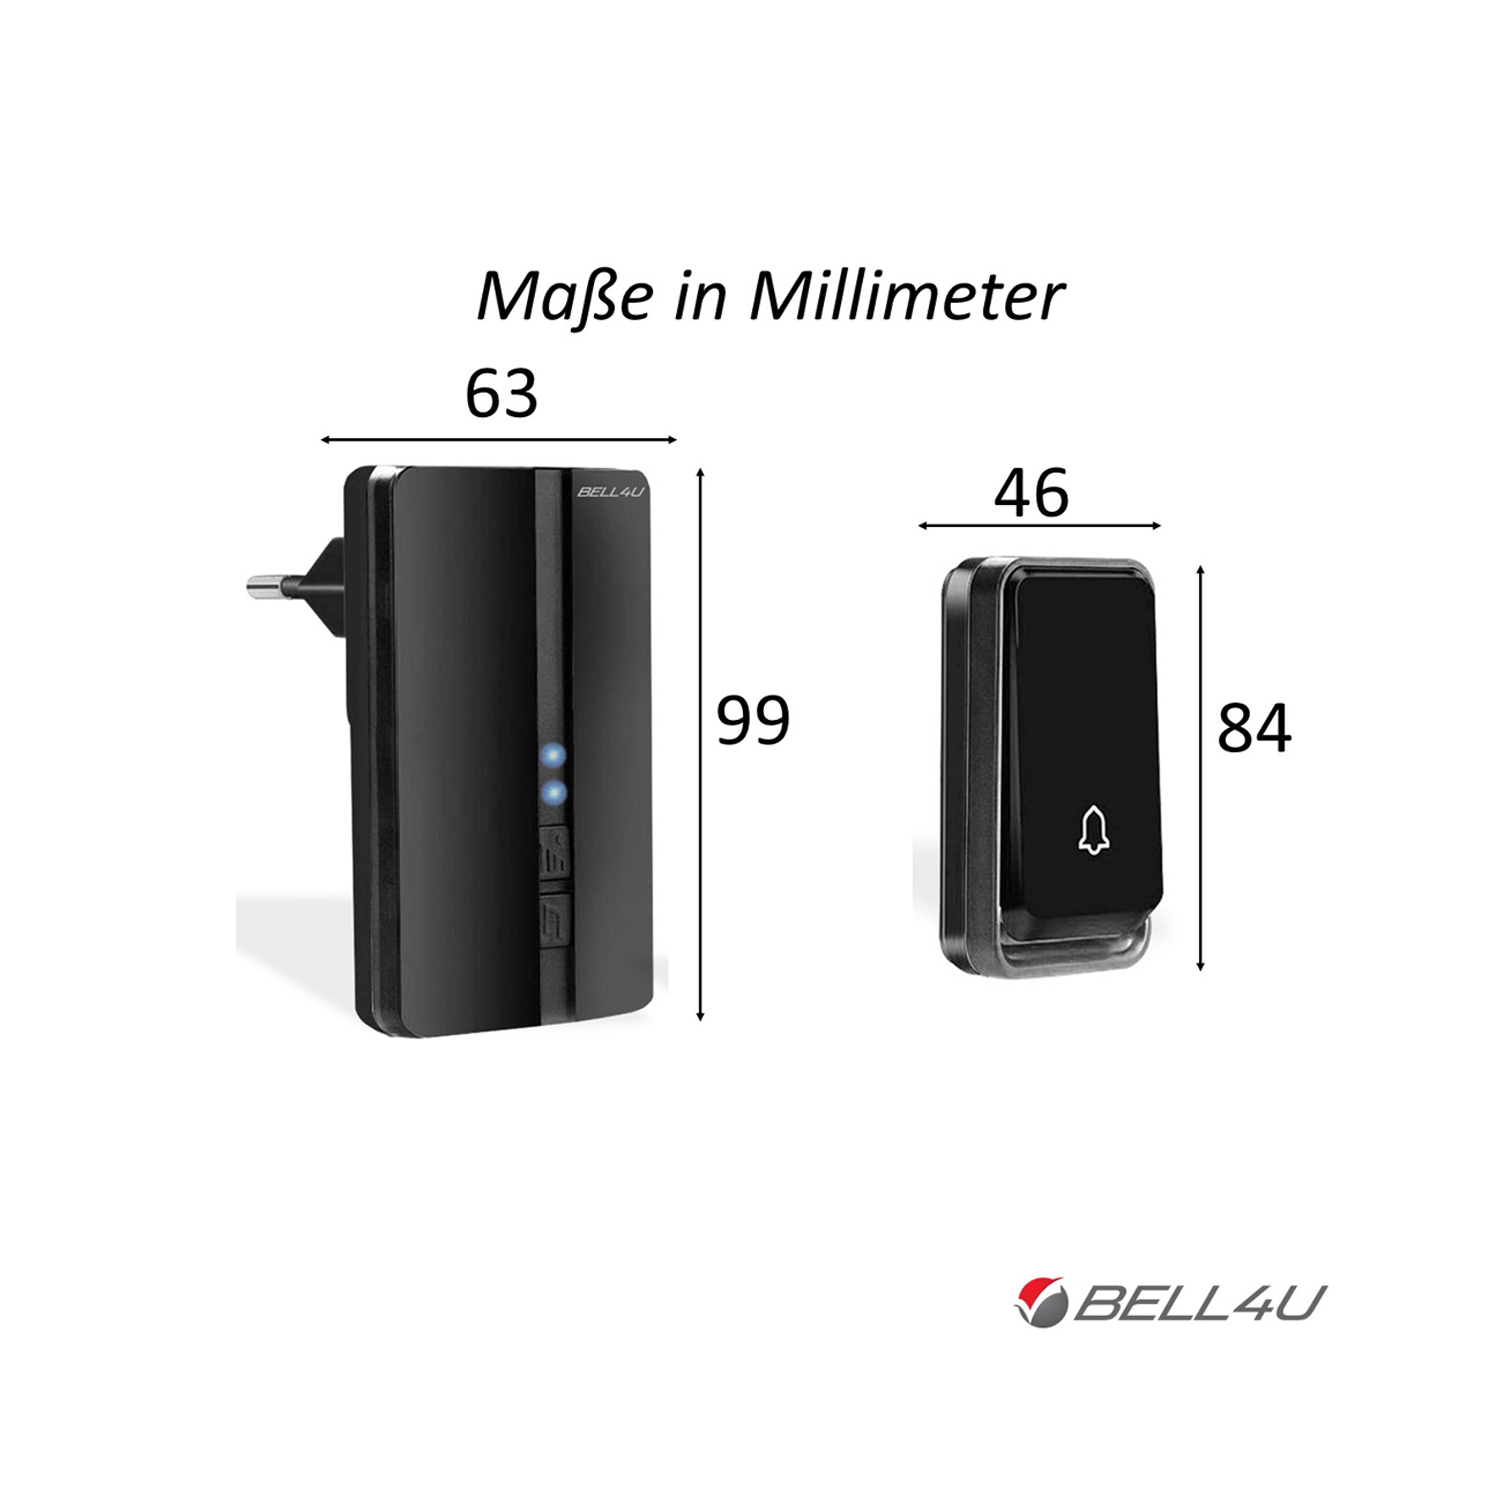 BELL4U Batterielos - Türklingel Empfänger 4